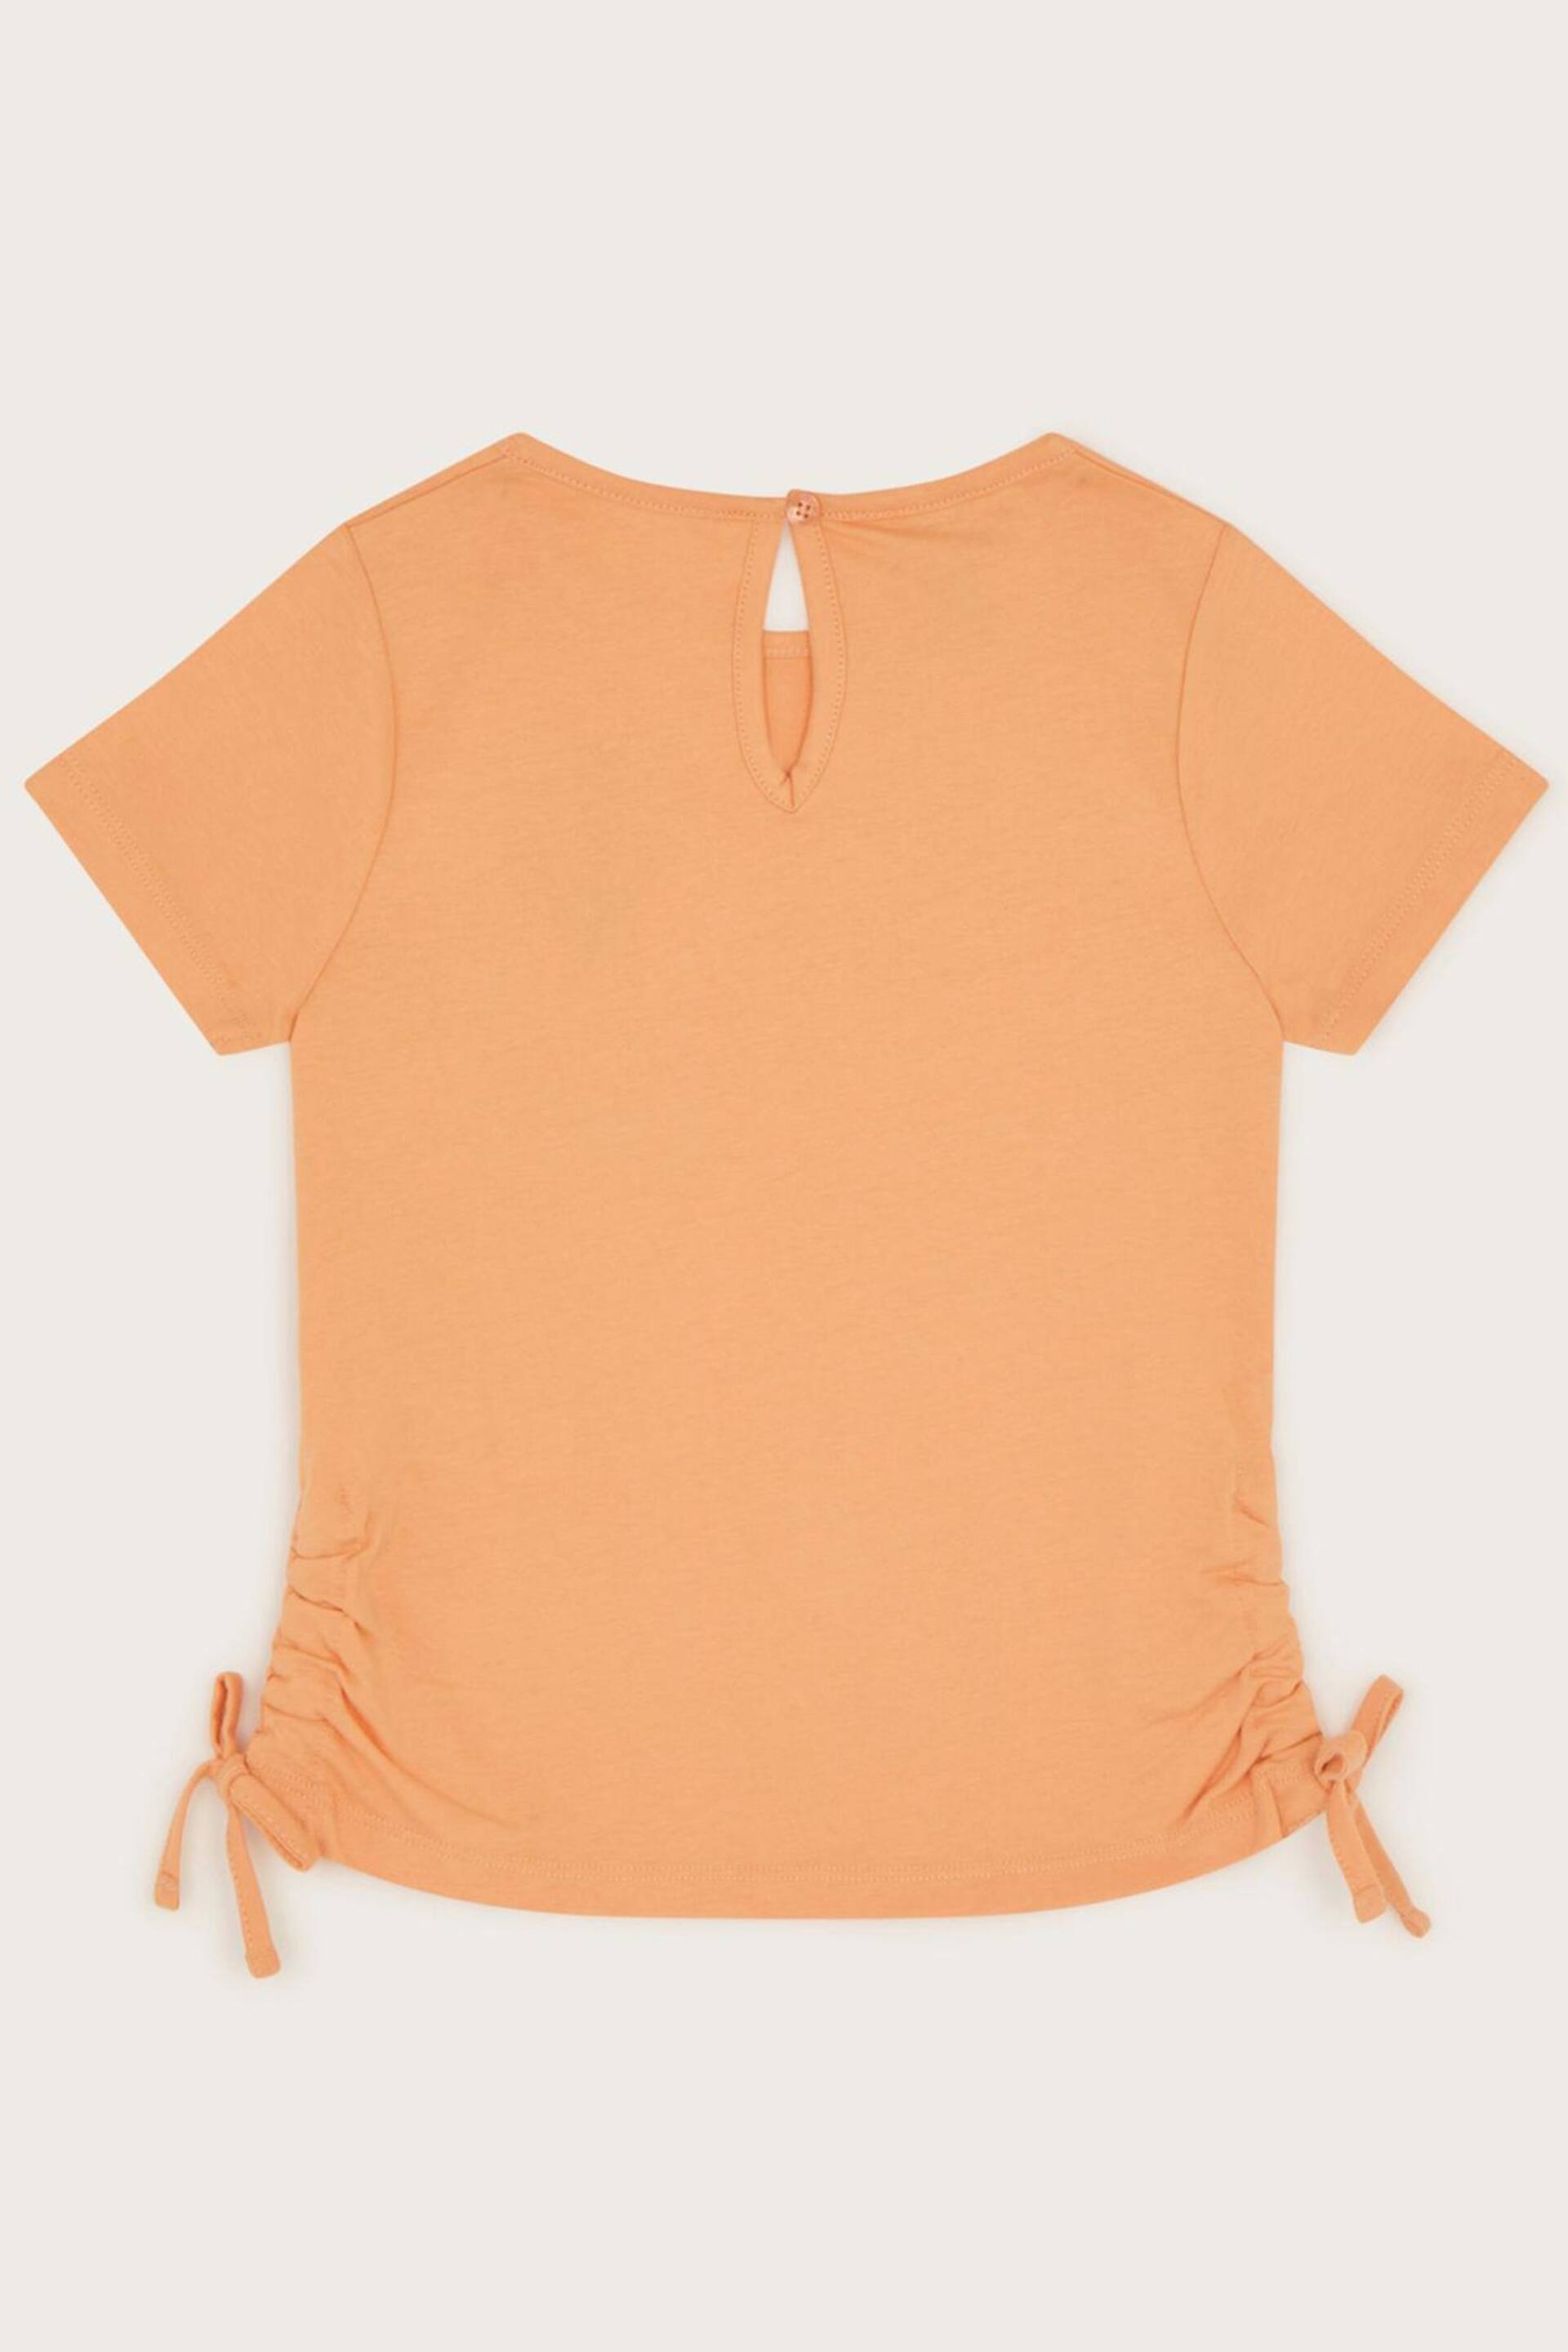 Monsoon Orange Crochet Pocket Top - Image 2 of 3